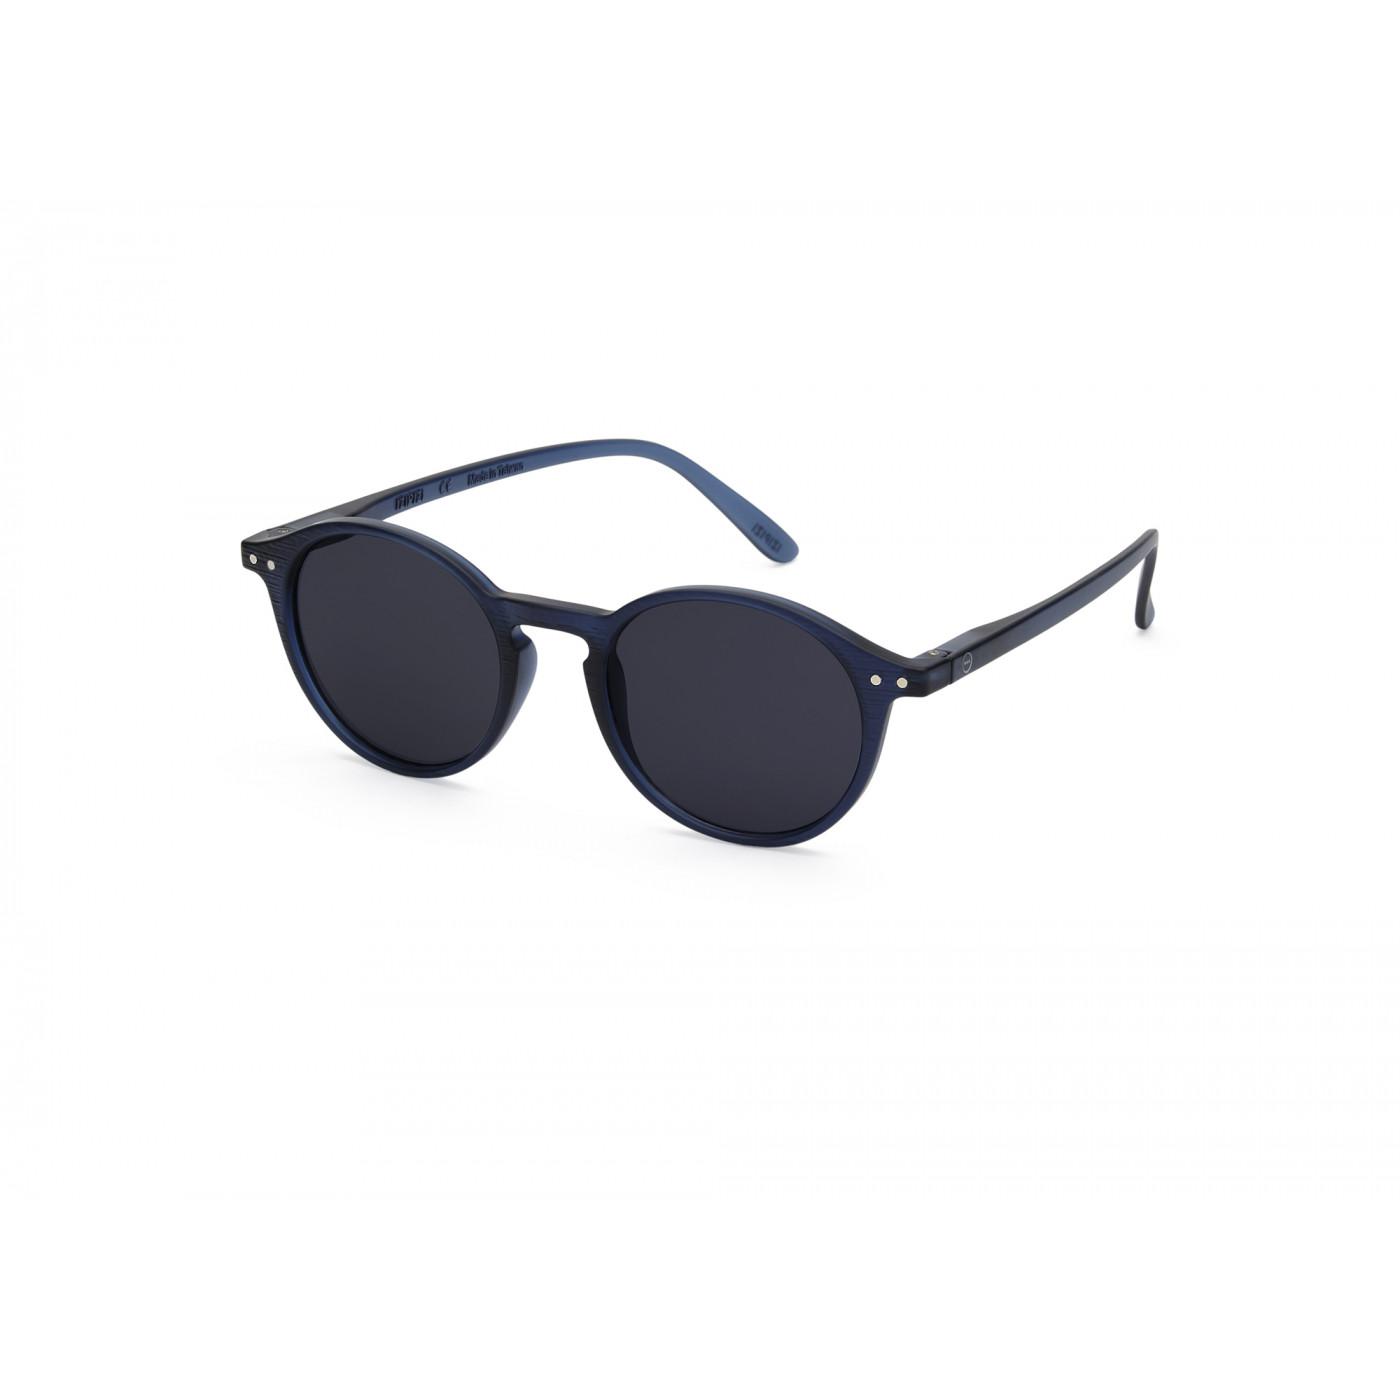 Sunglasses frame D deep blue essentia collection by Izipizi